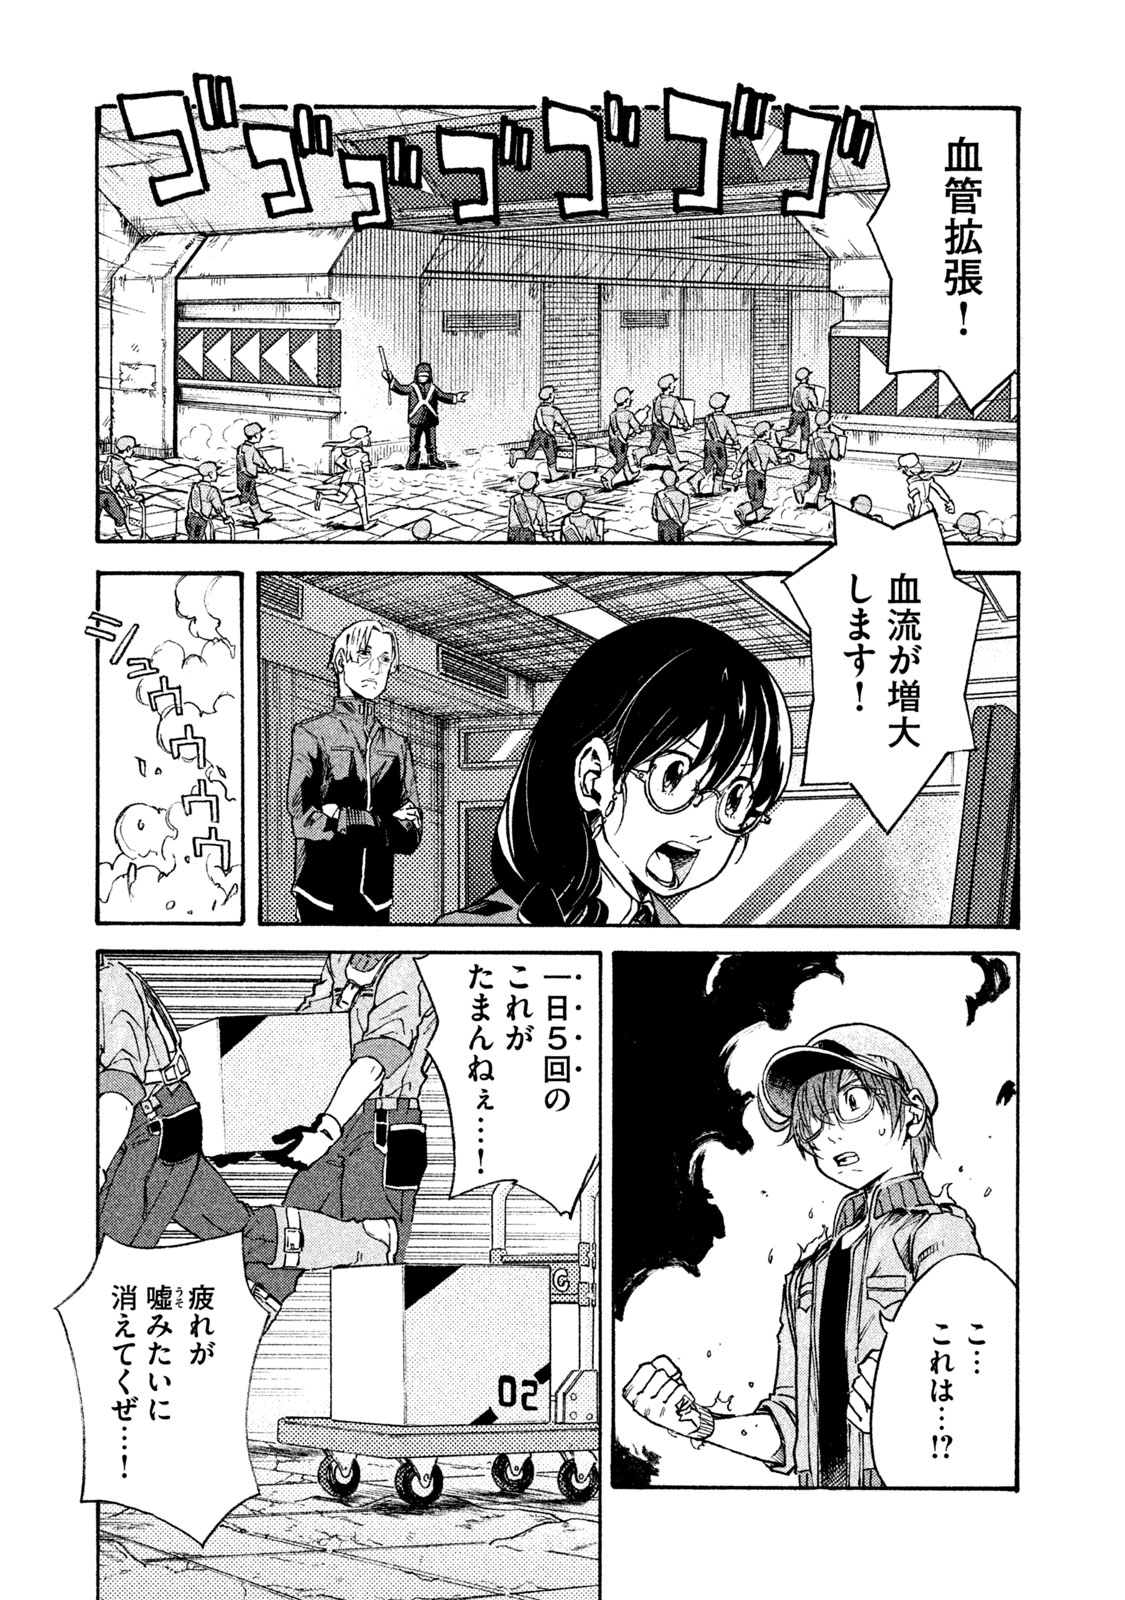 Hataraku Saibou BLACK - Chapter 12 - Page 9